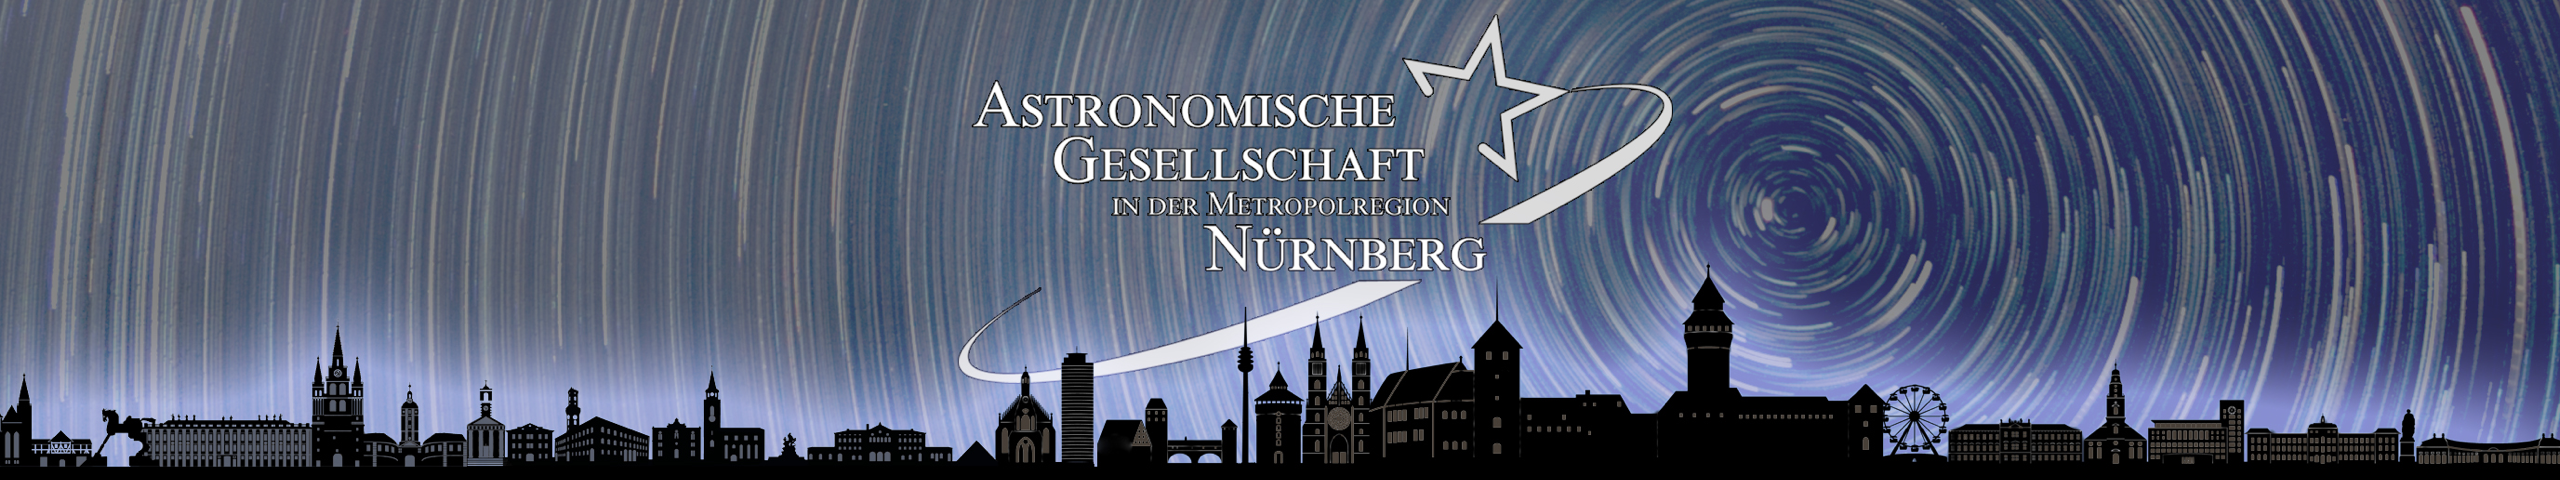 Astronomische Gesellschaft in der Metropolregion Nürnberg e.V. (AGN) - Dachverband für Astronomie in Nürnberg